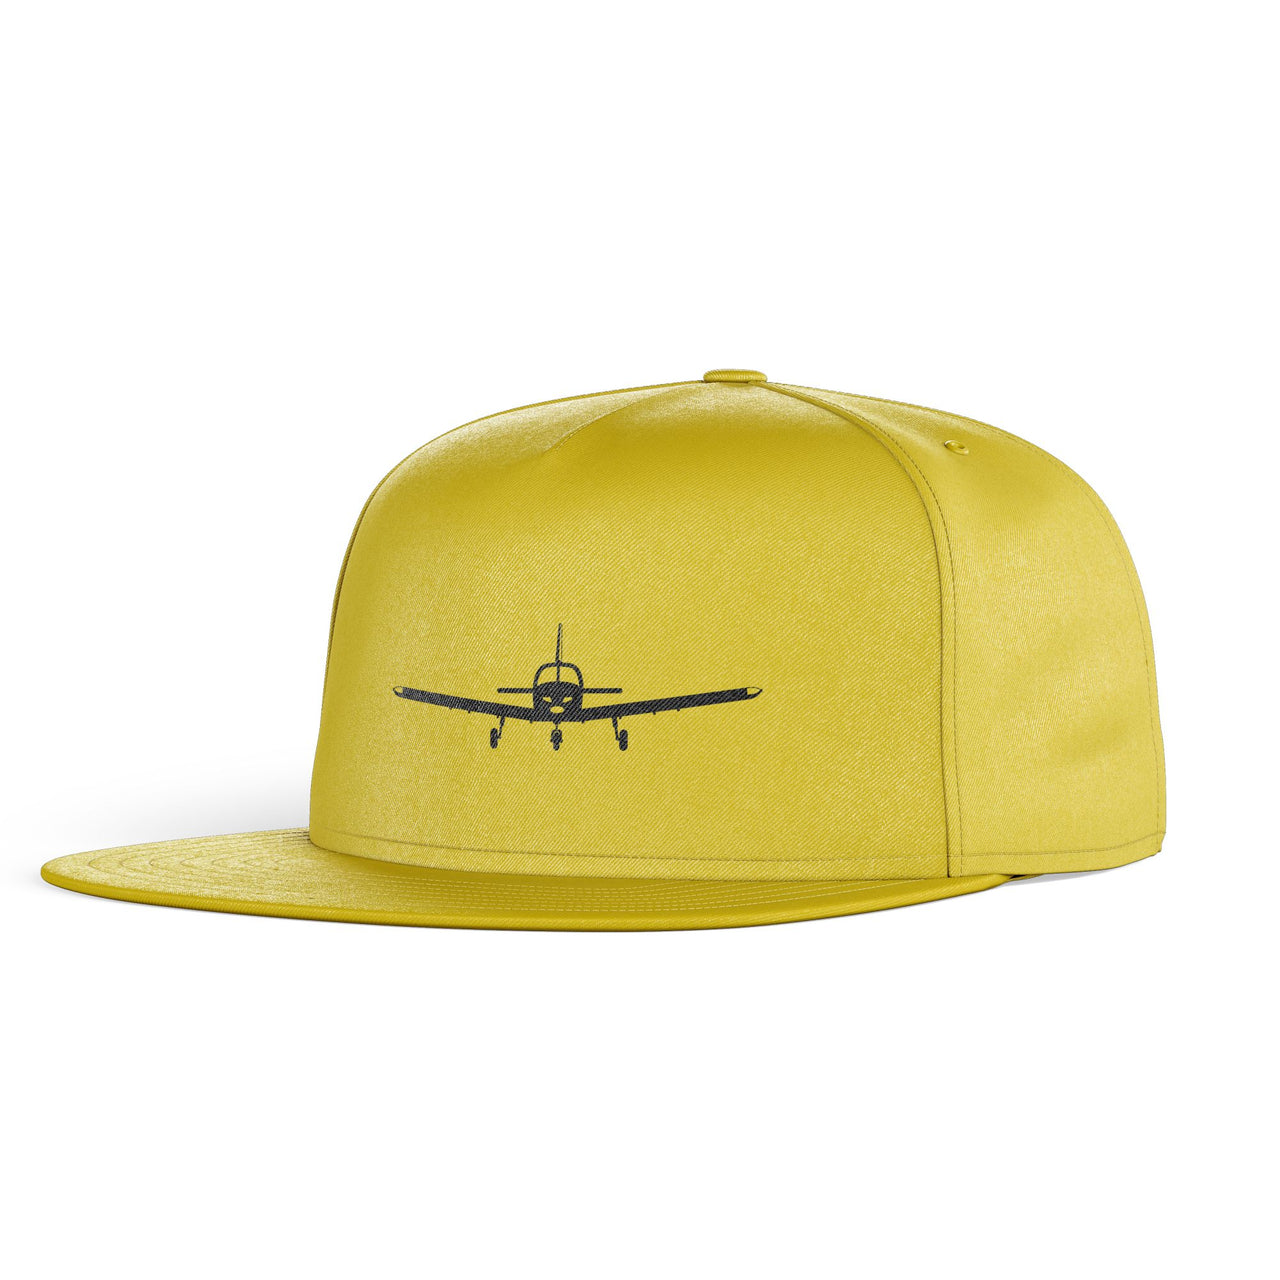 Piper PA28 Silhouette Plane Designed Snapback Caps & Hats